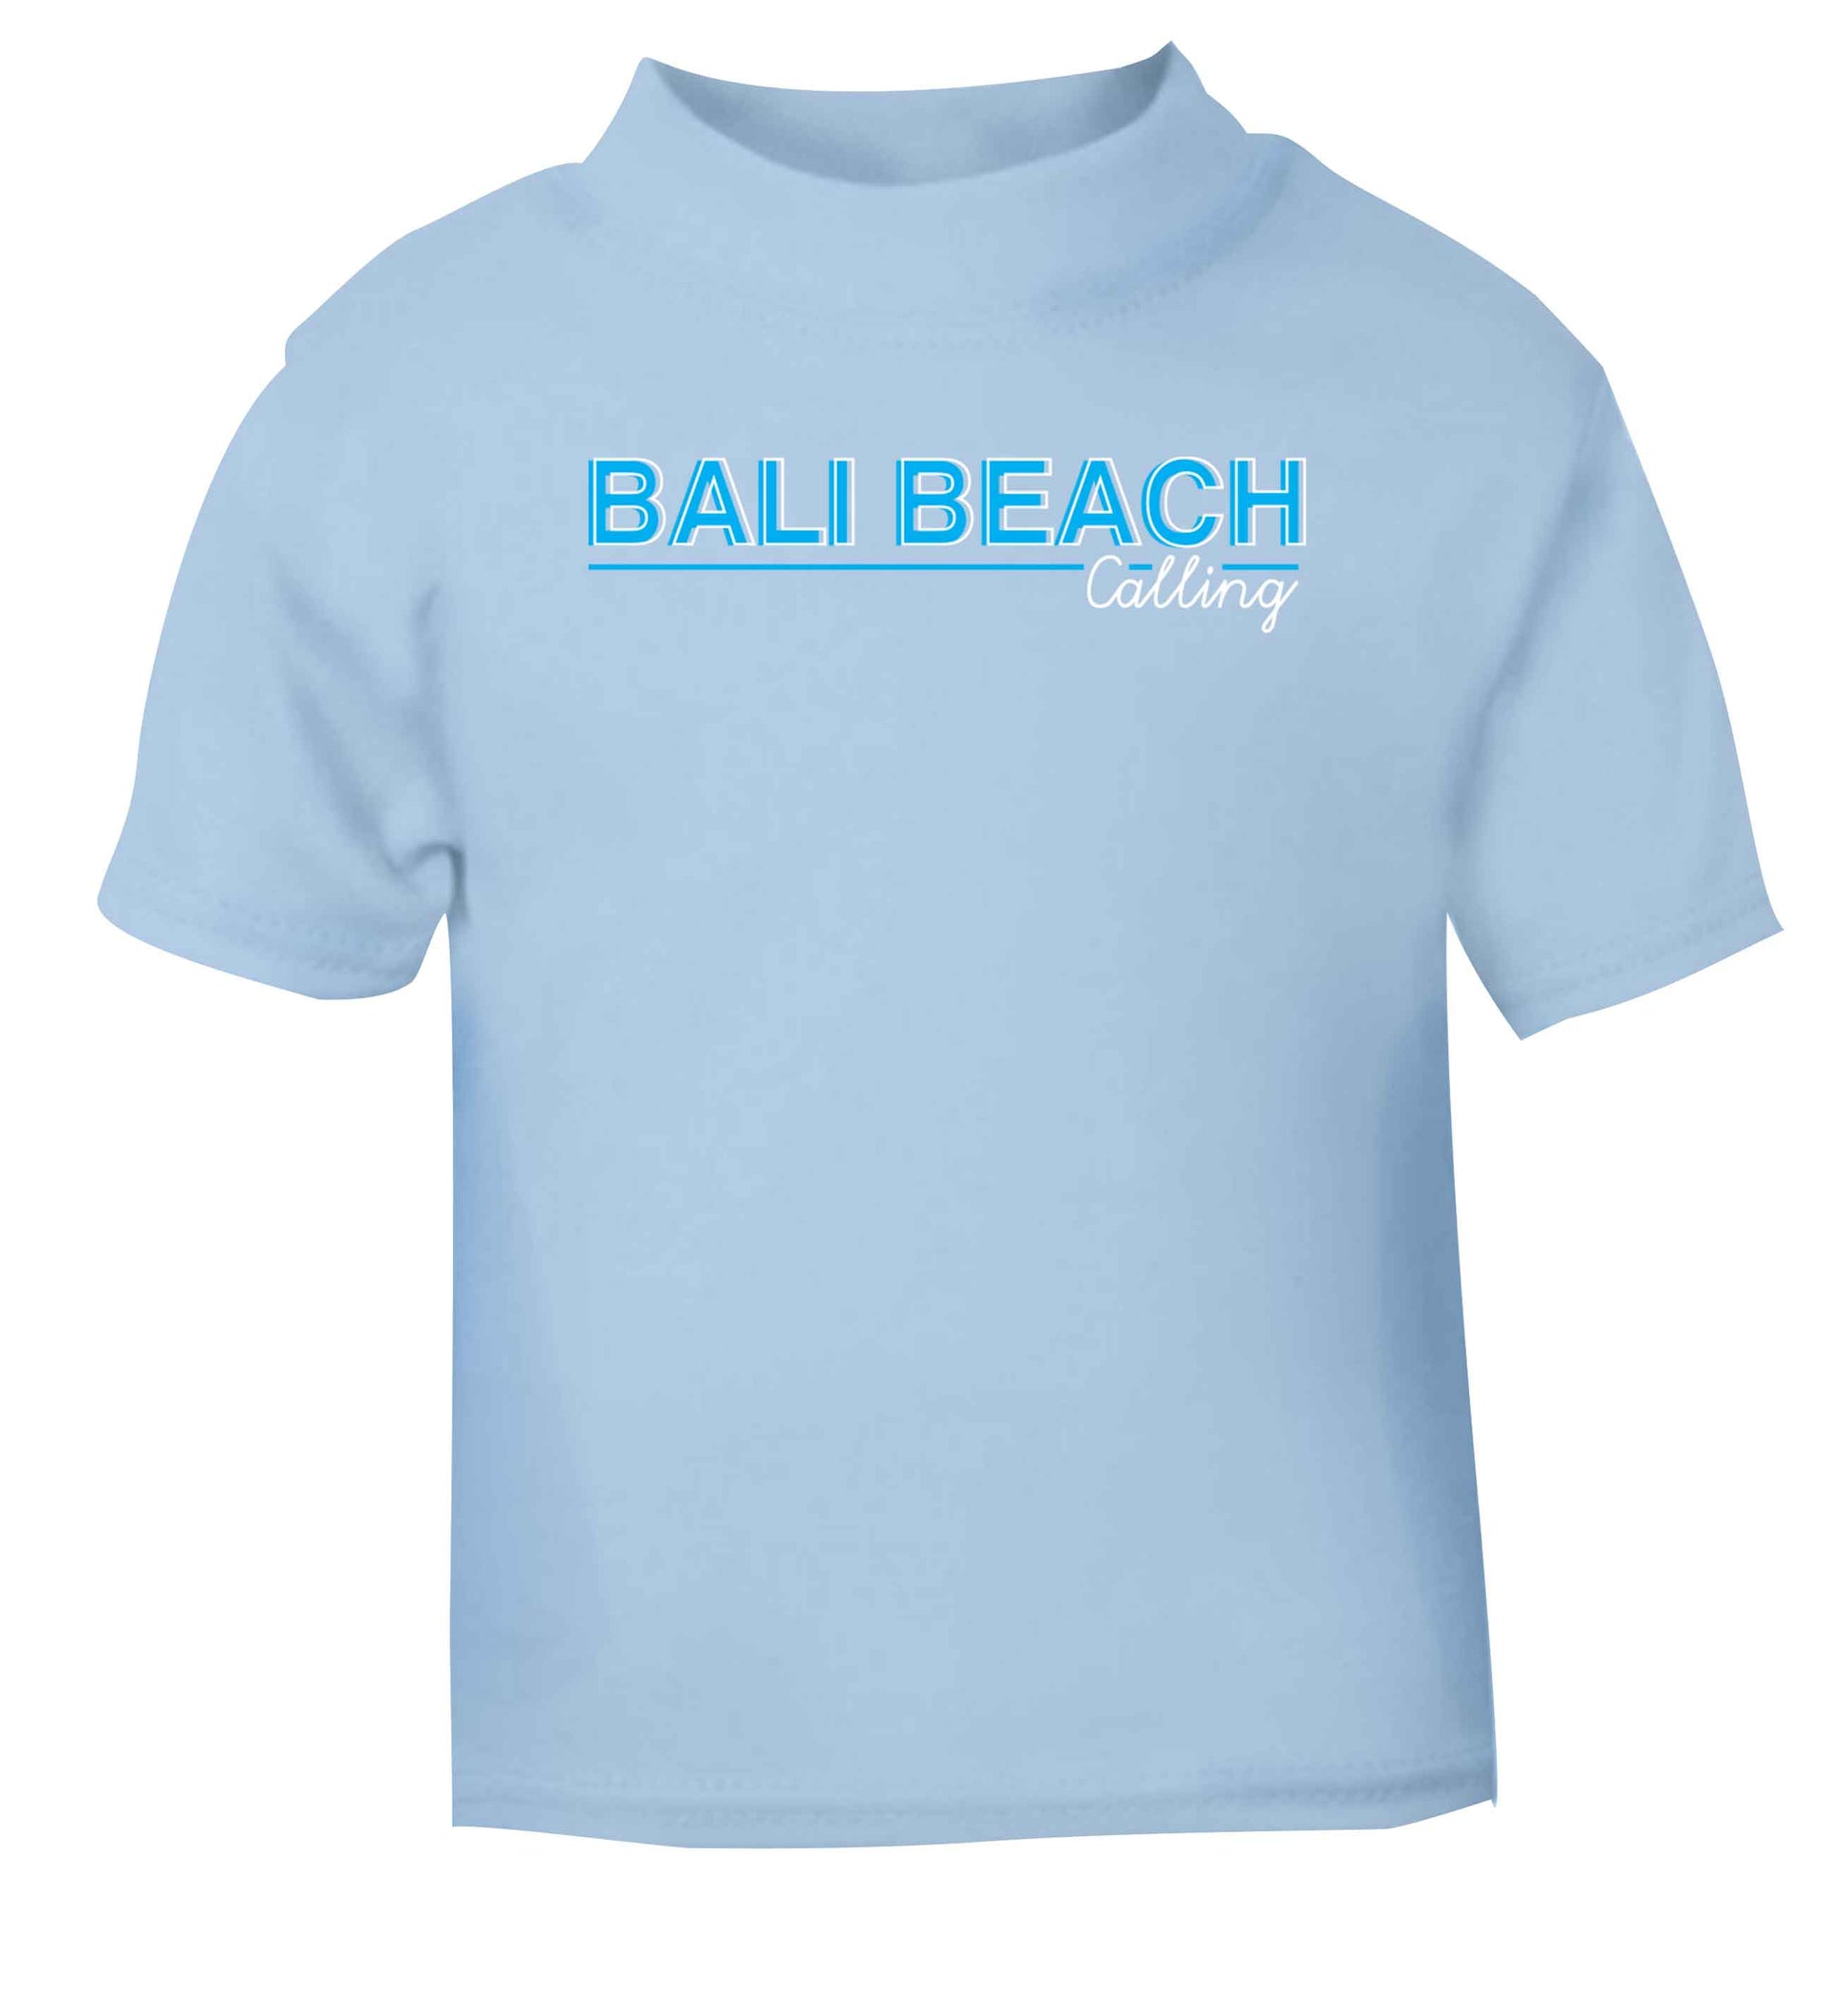 Bali beach calling light blue Baby Toddler Tshirt 2 Years